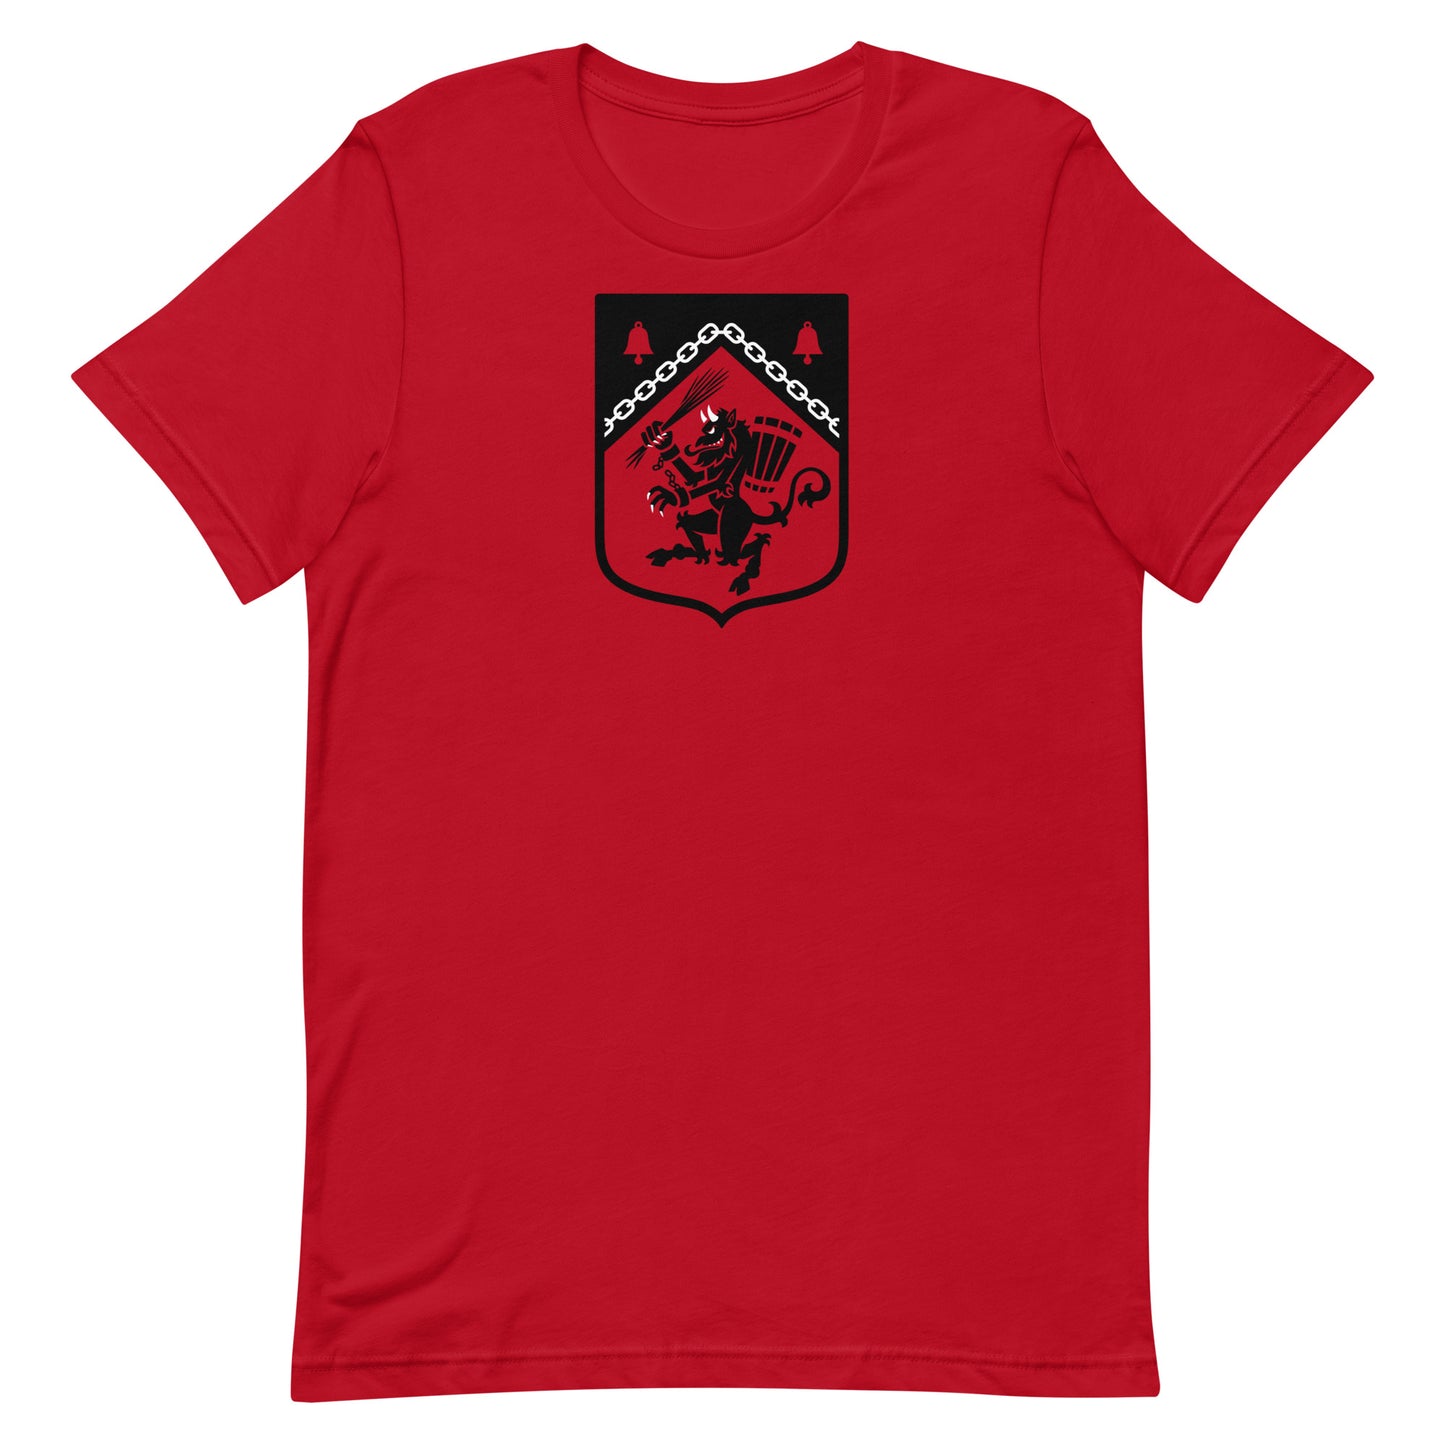 Krampus Rampant Heraldic Shield Short-Sleeve T-Shirt